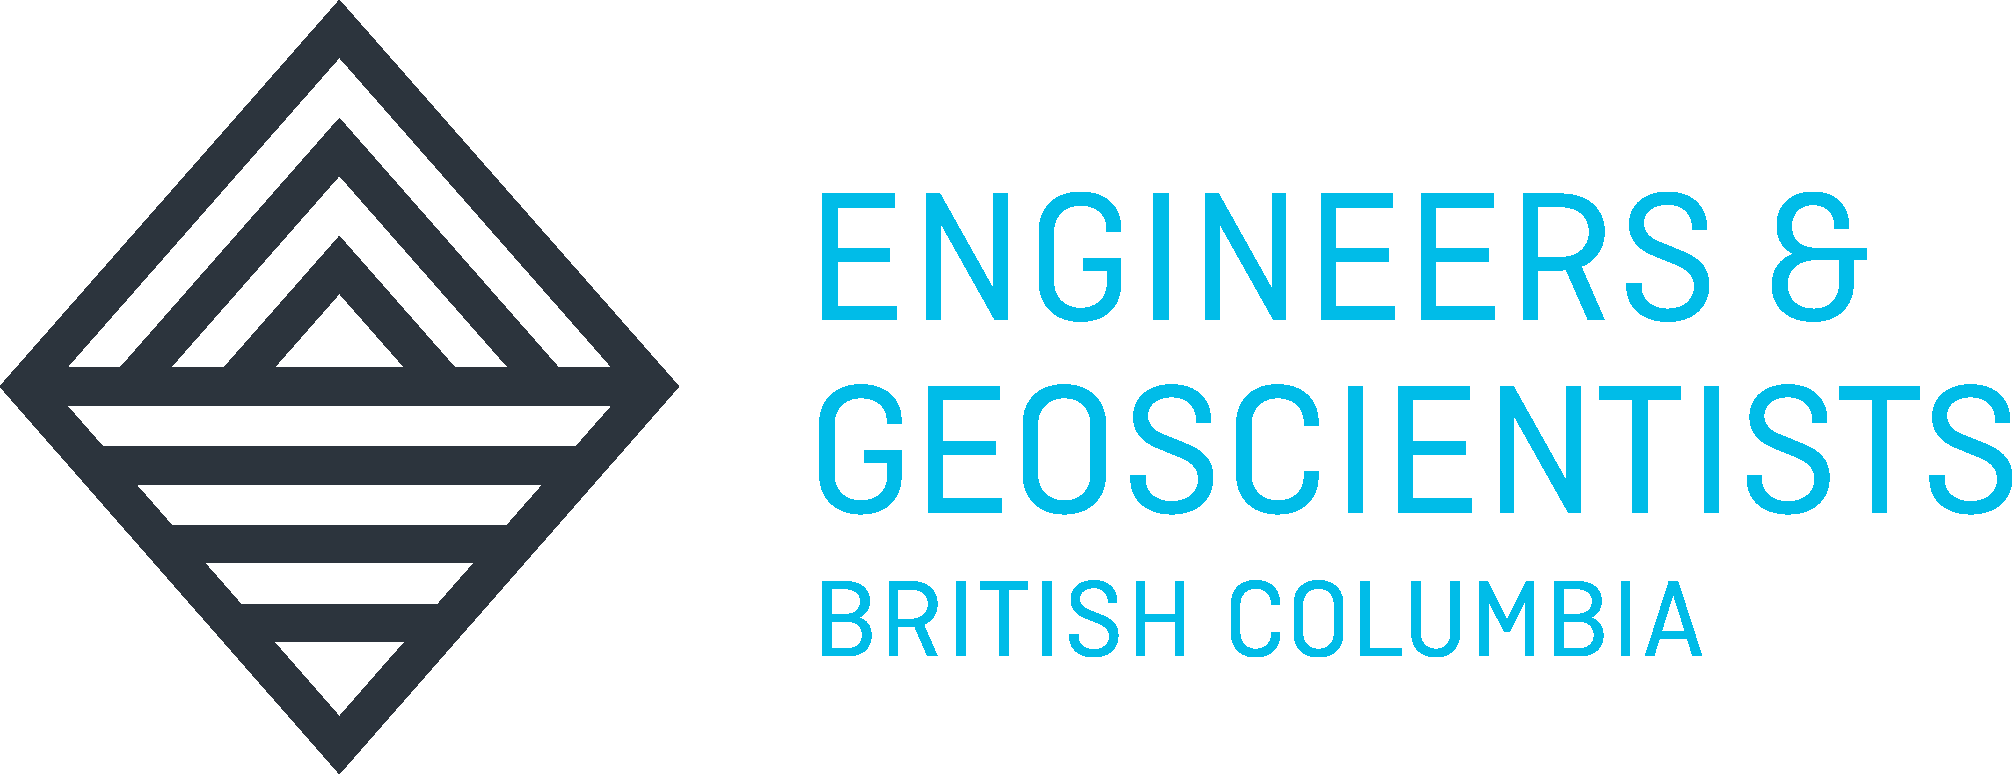 Engineers Geoscientists BC logo